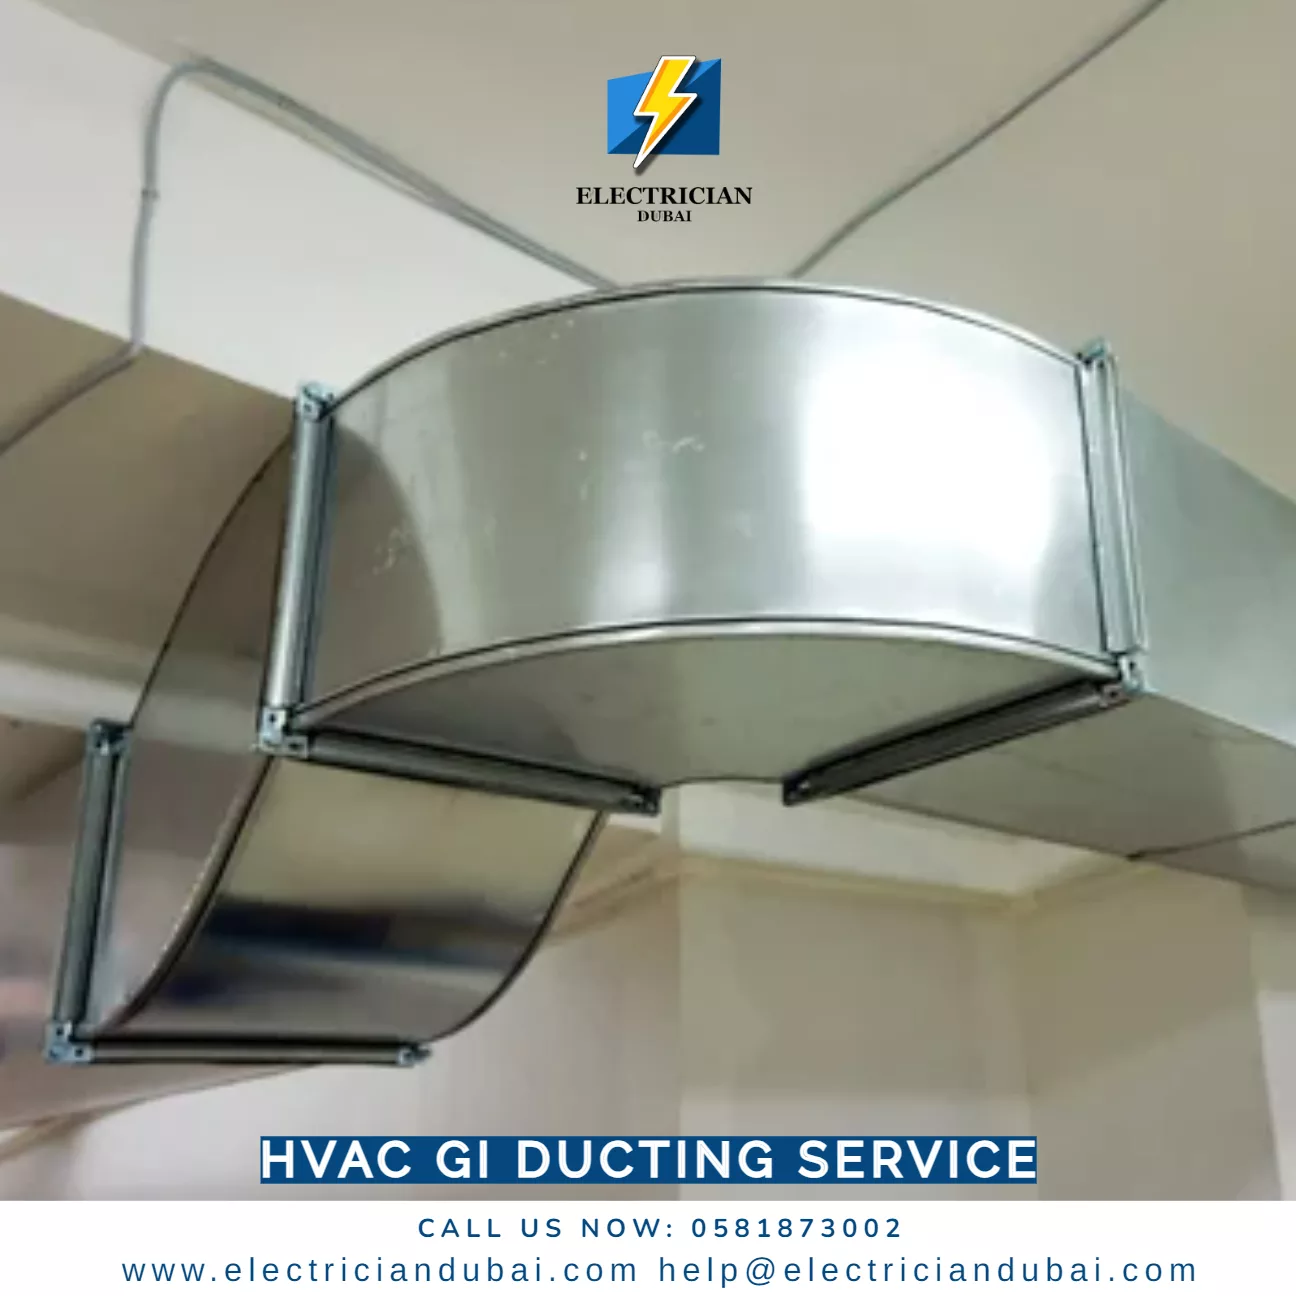 HVAC GI Ducting Service